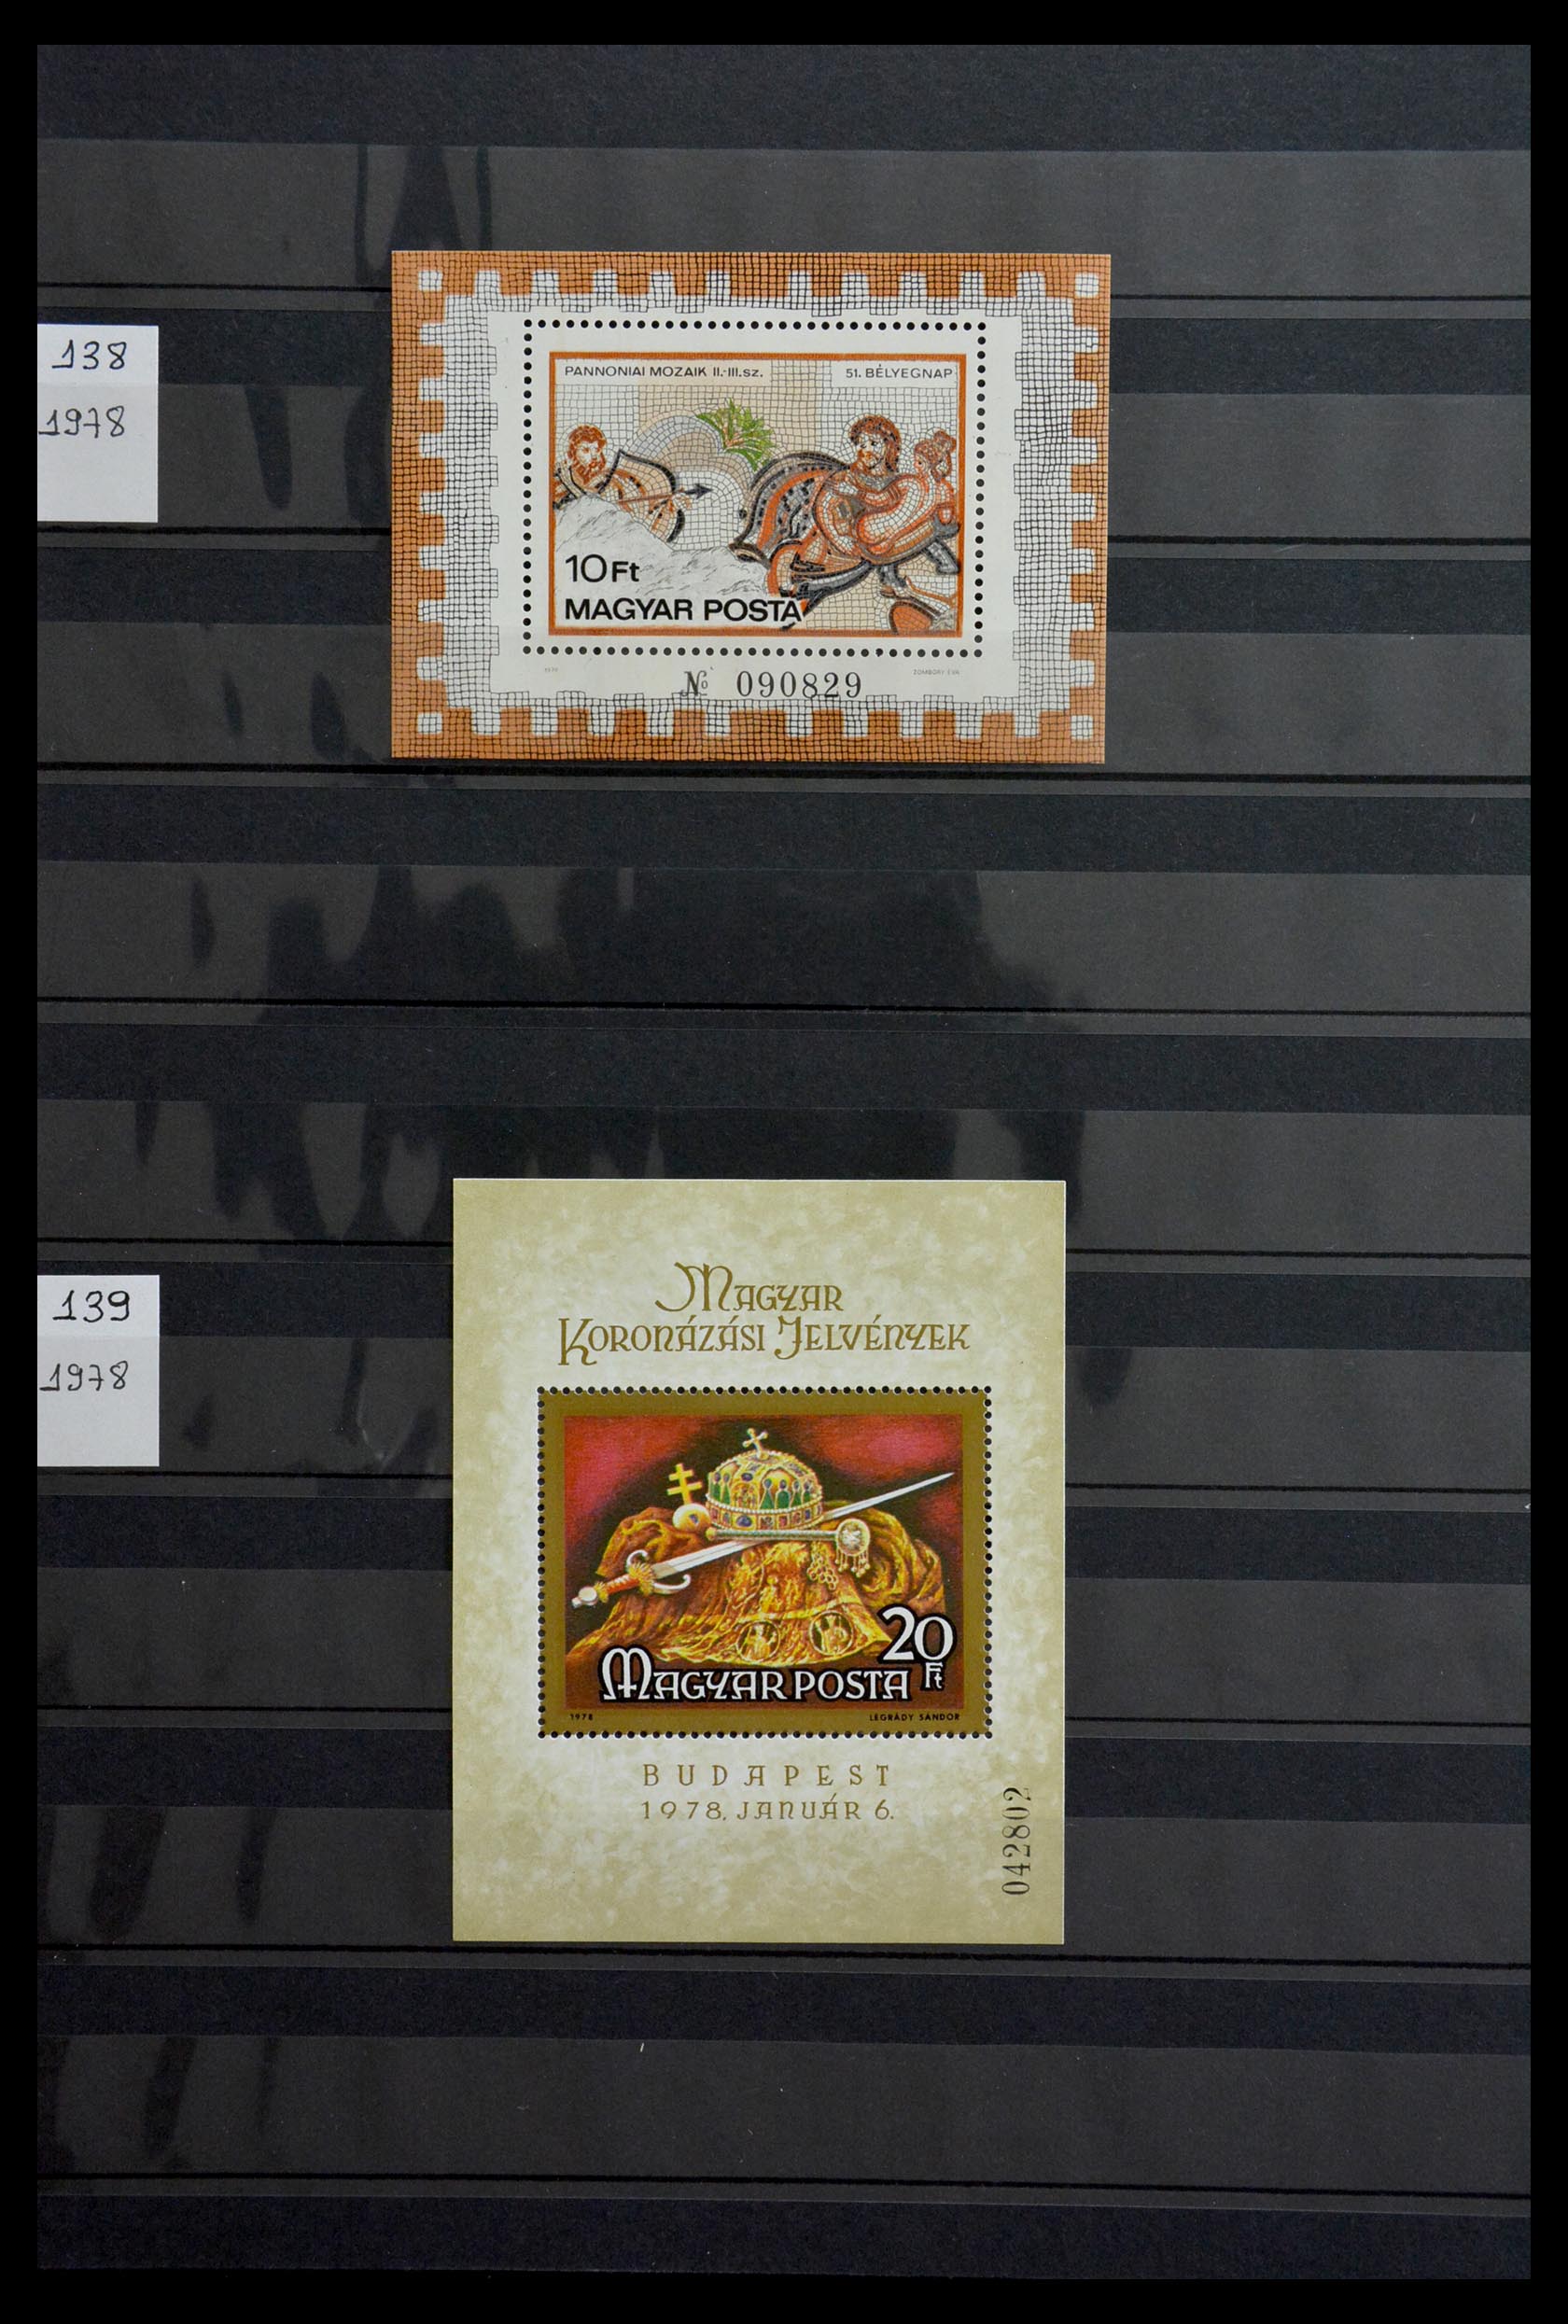 29283 064 - 29283 Hungary souvenir sheets 1938-1984.